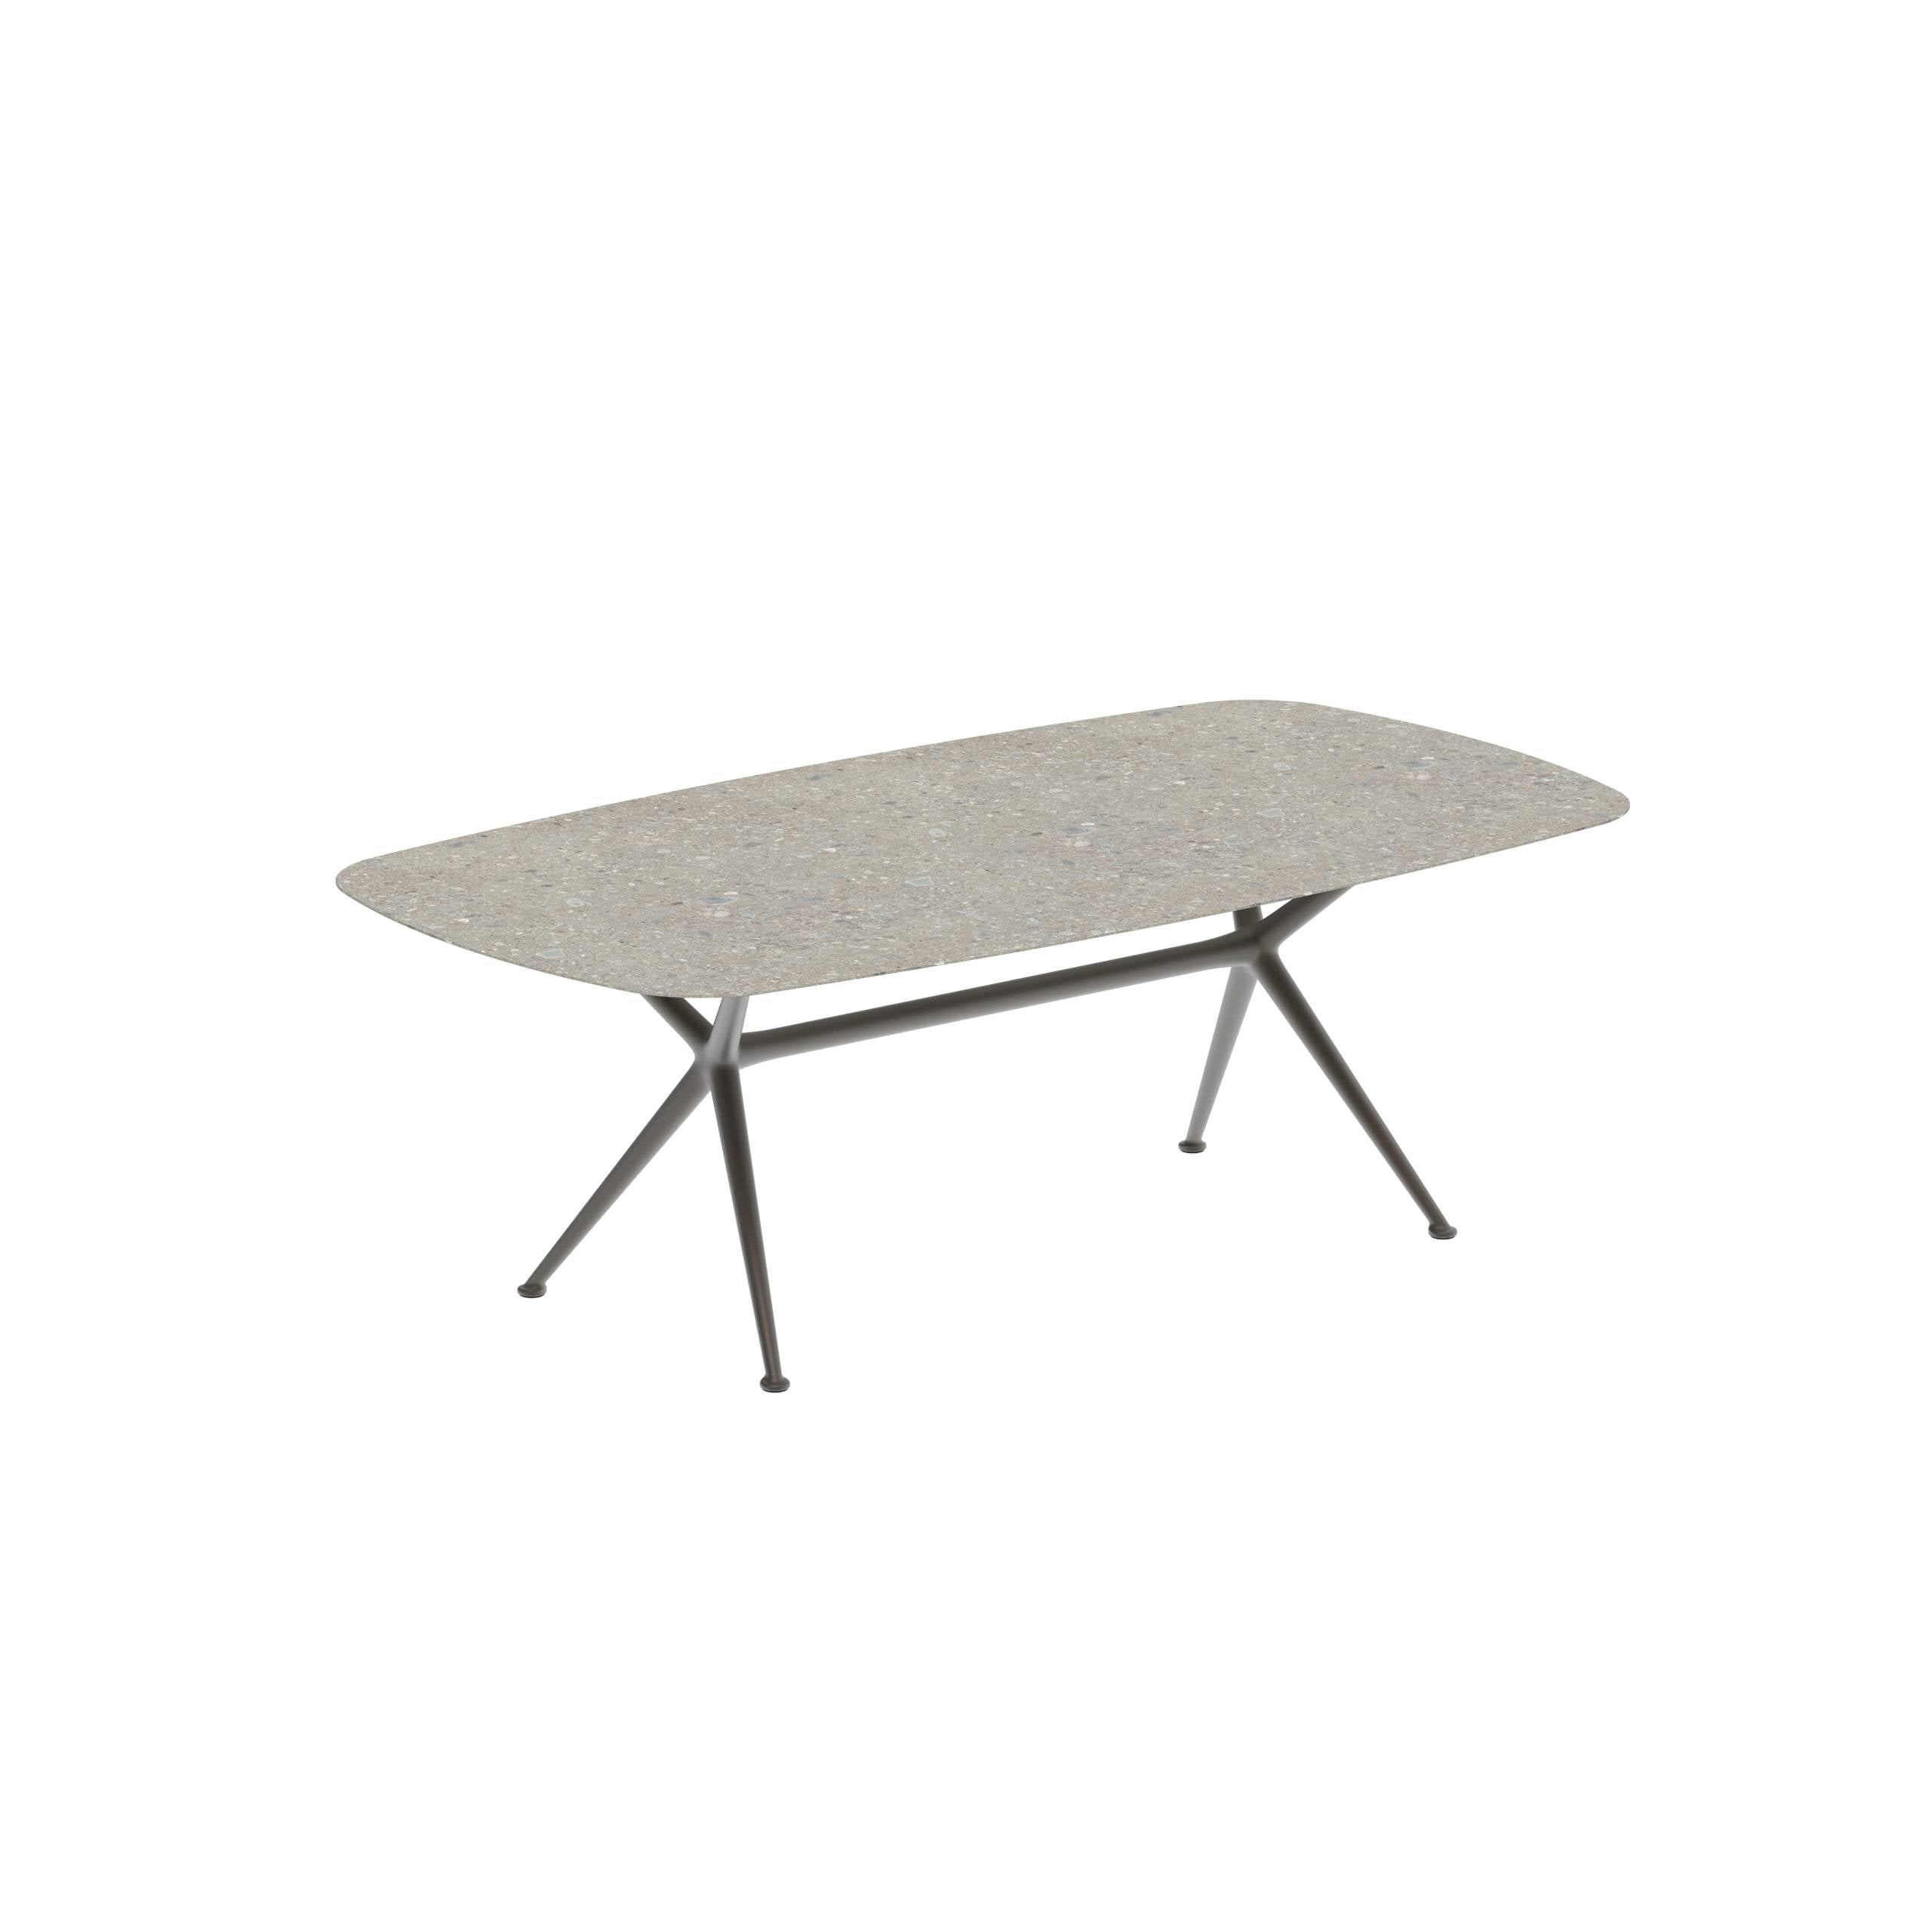 Exes Table 220x120cm Alu Legs Bronze - Table Top Ceramic Ceppo Dolomitica